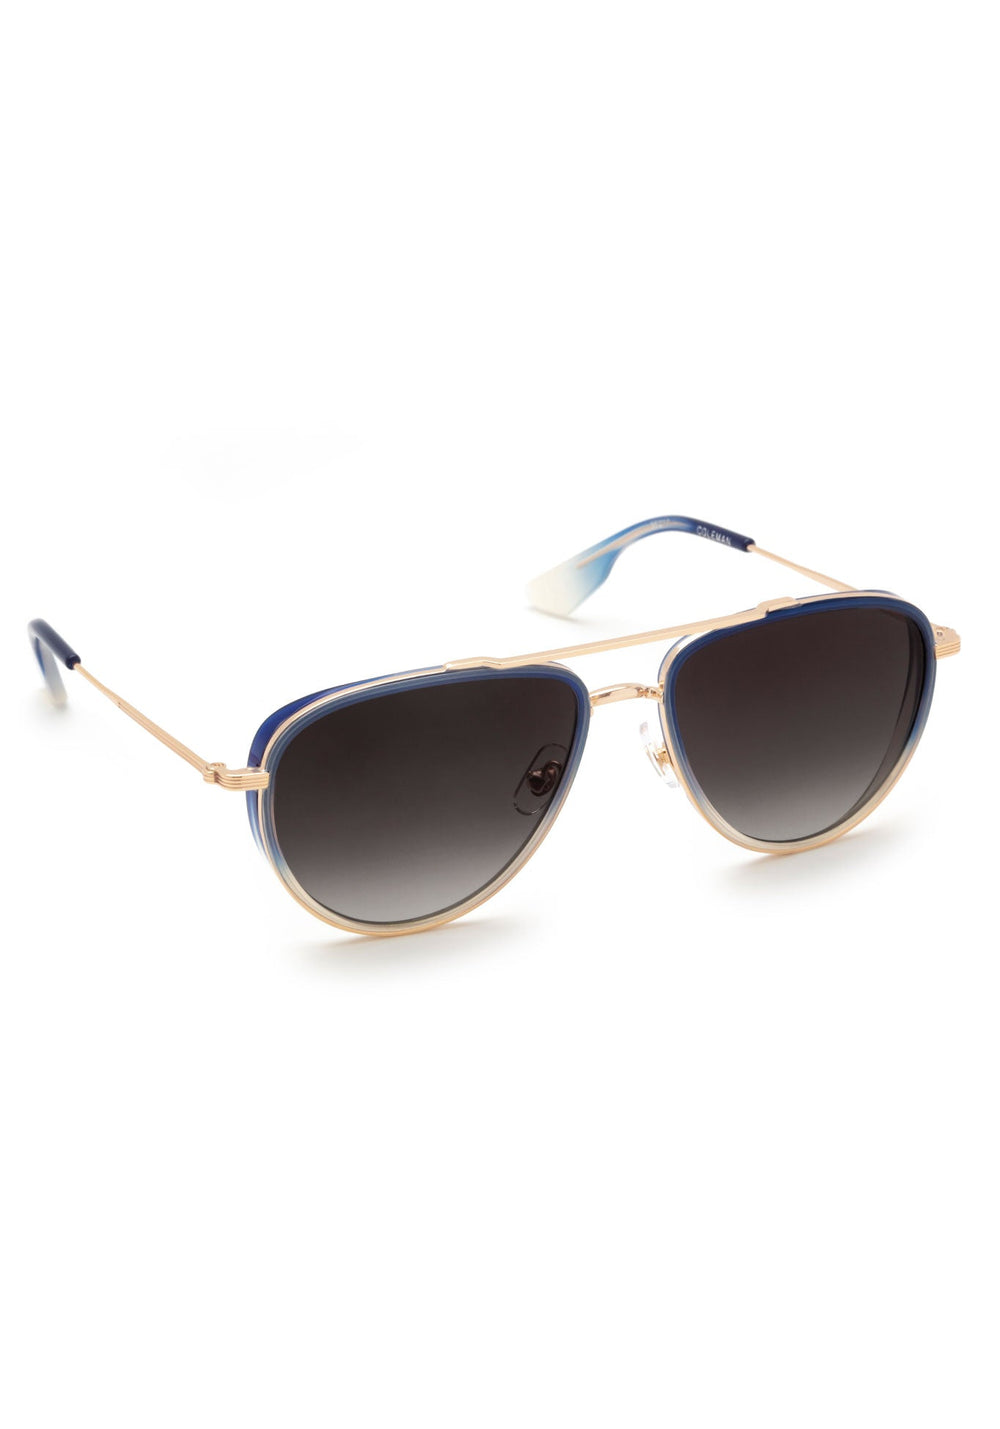 COLEMAN | 18K + Matte Indigo Fade + Gravity Handcrafted, navy acetate luxury KREWE sunglasses